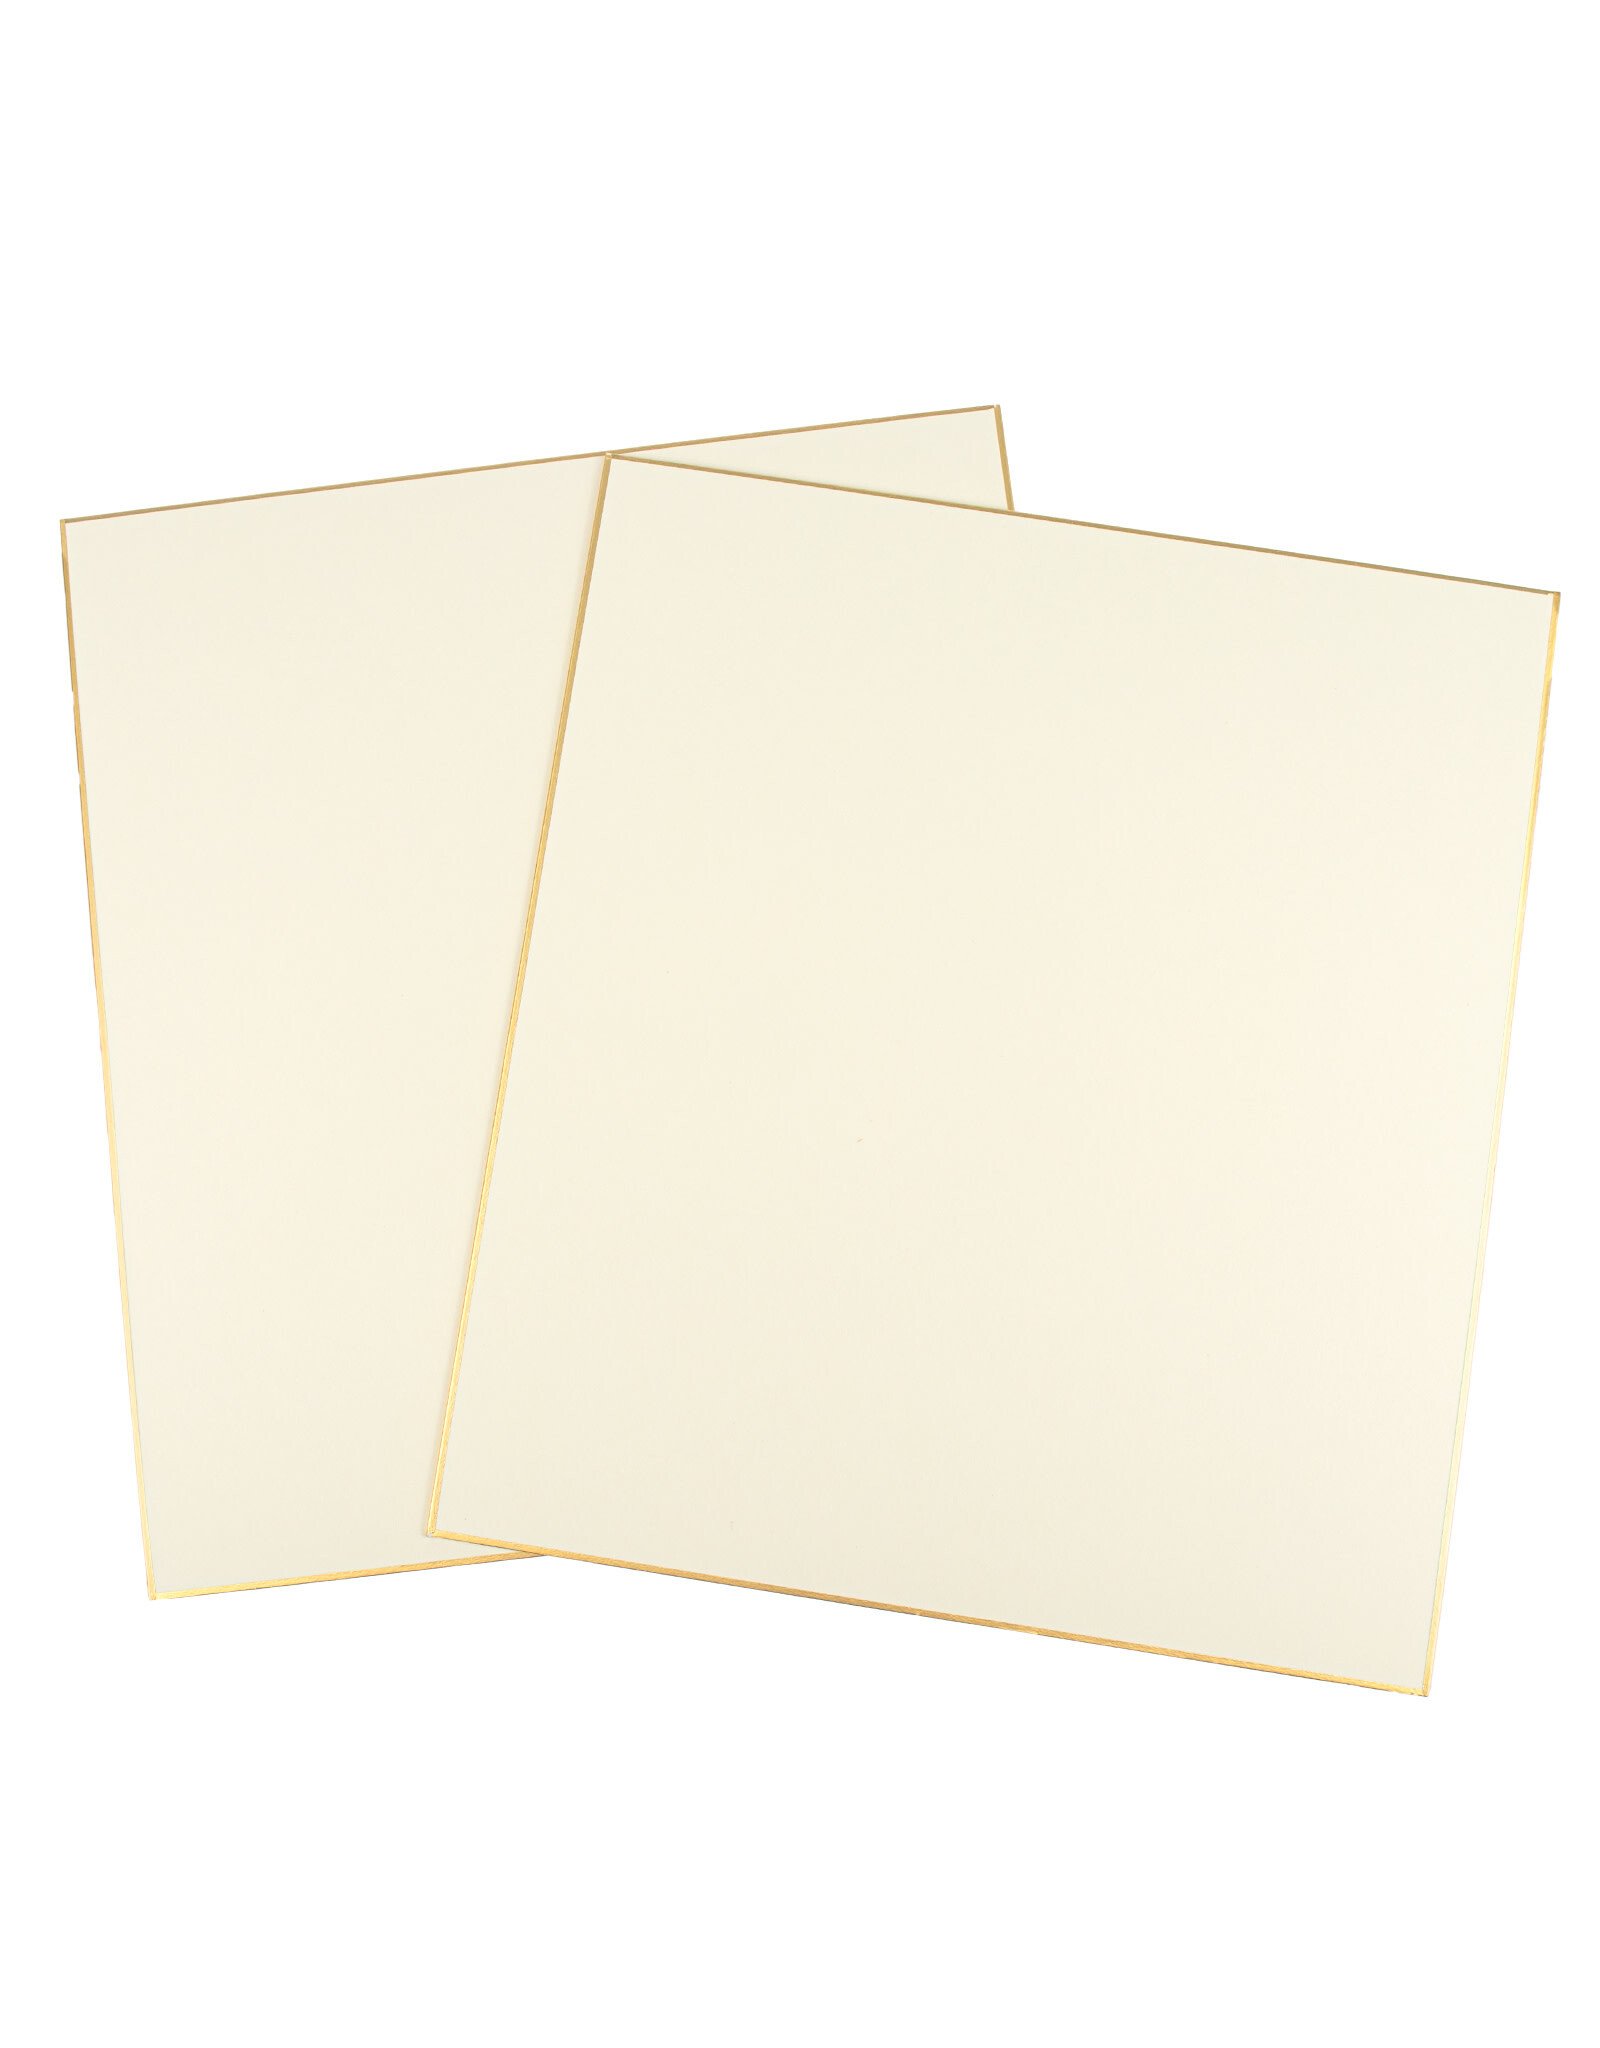 AITOH Aitoh Shikishi Board: Torinoko Paper, Pack of 2, 9.5" x 10.75"